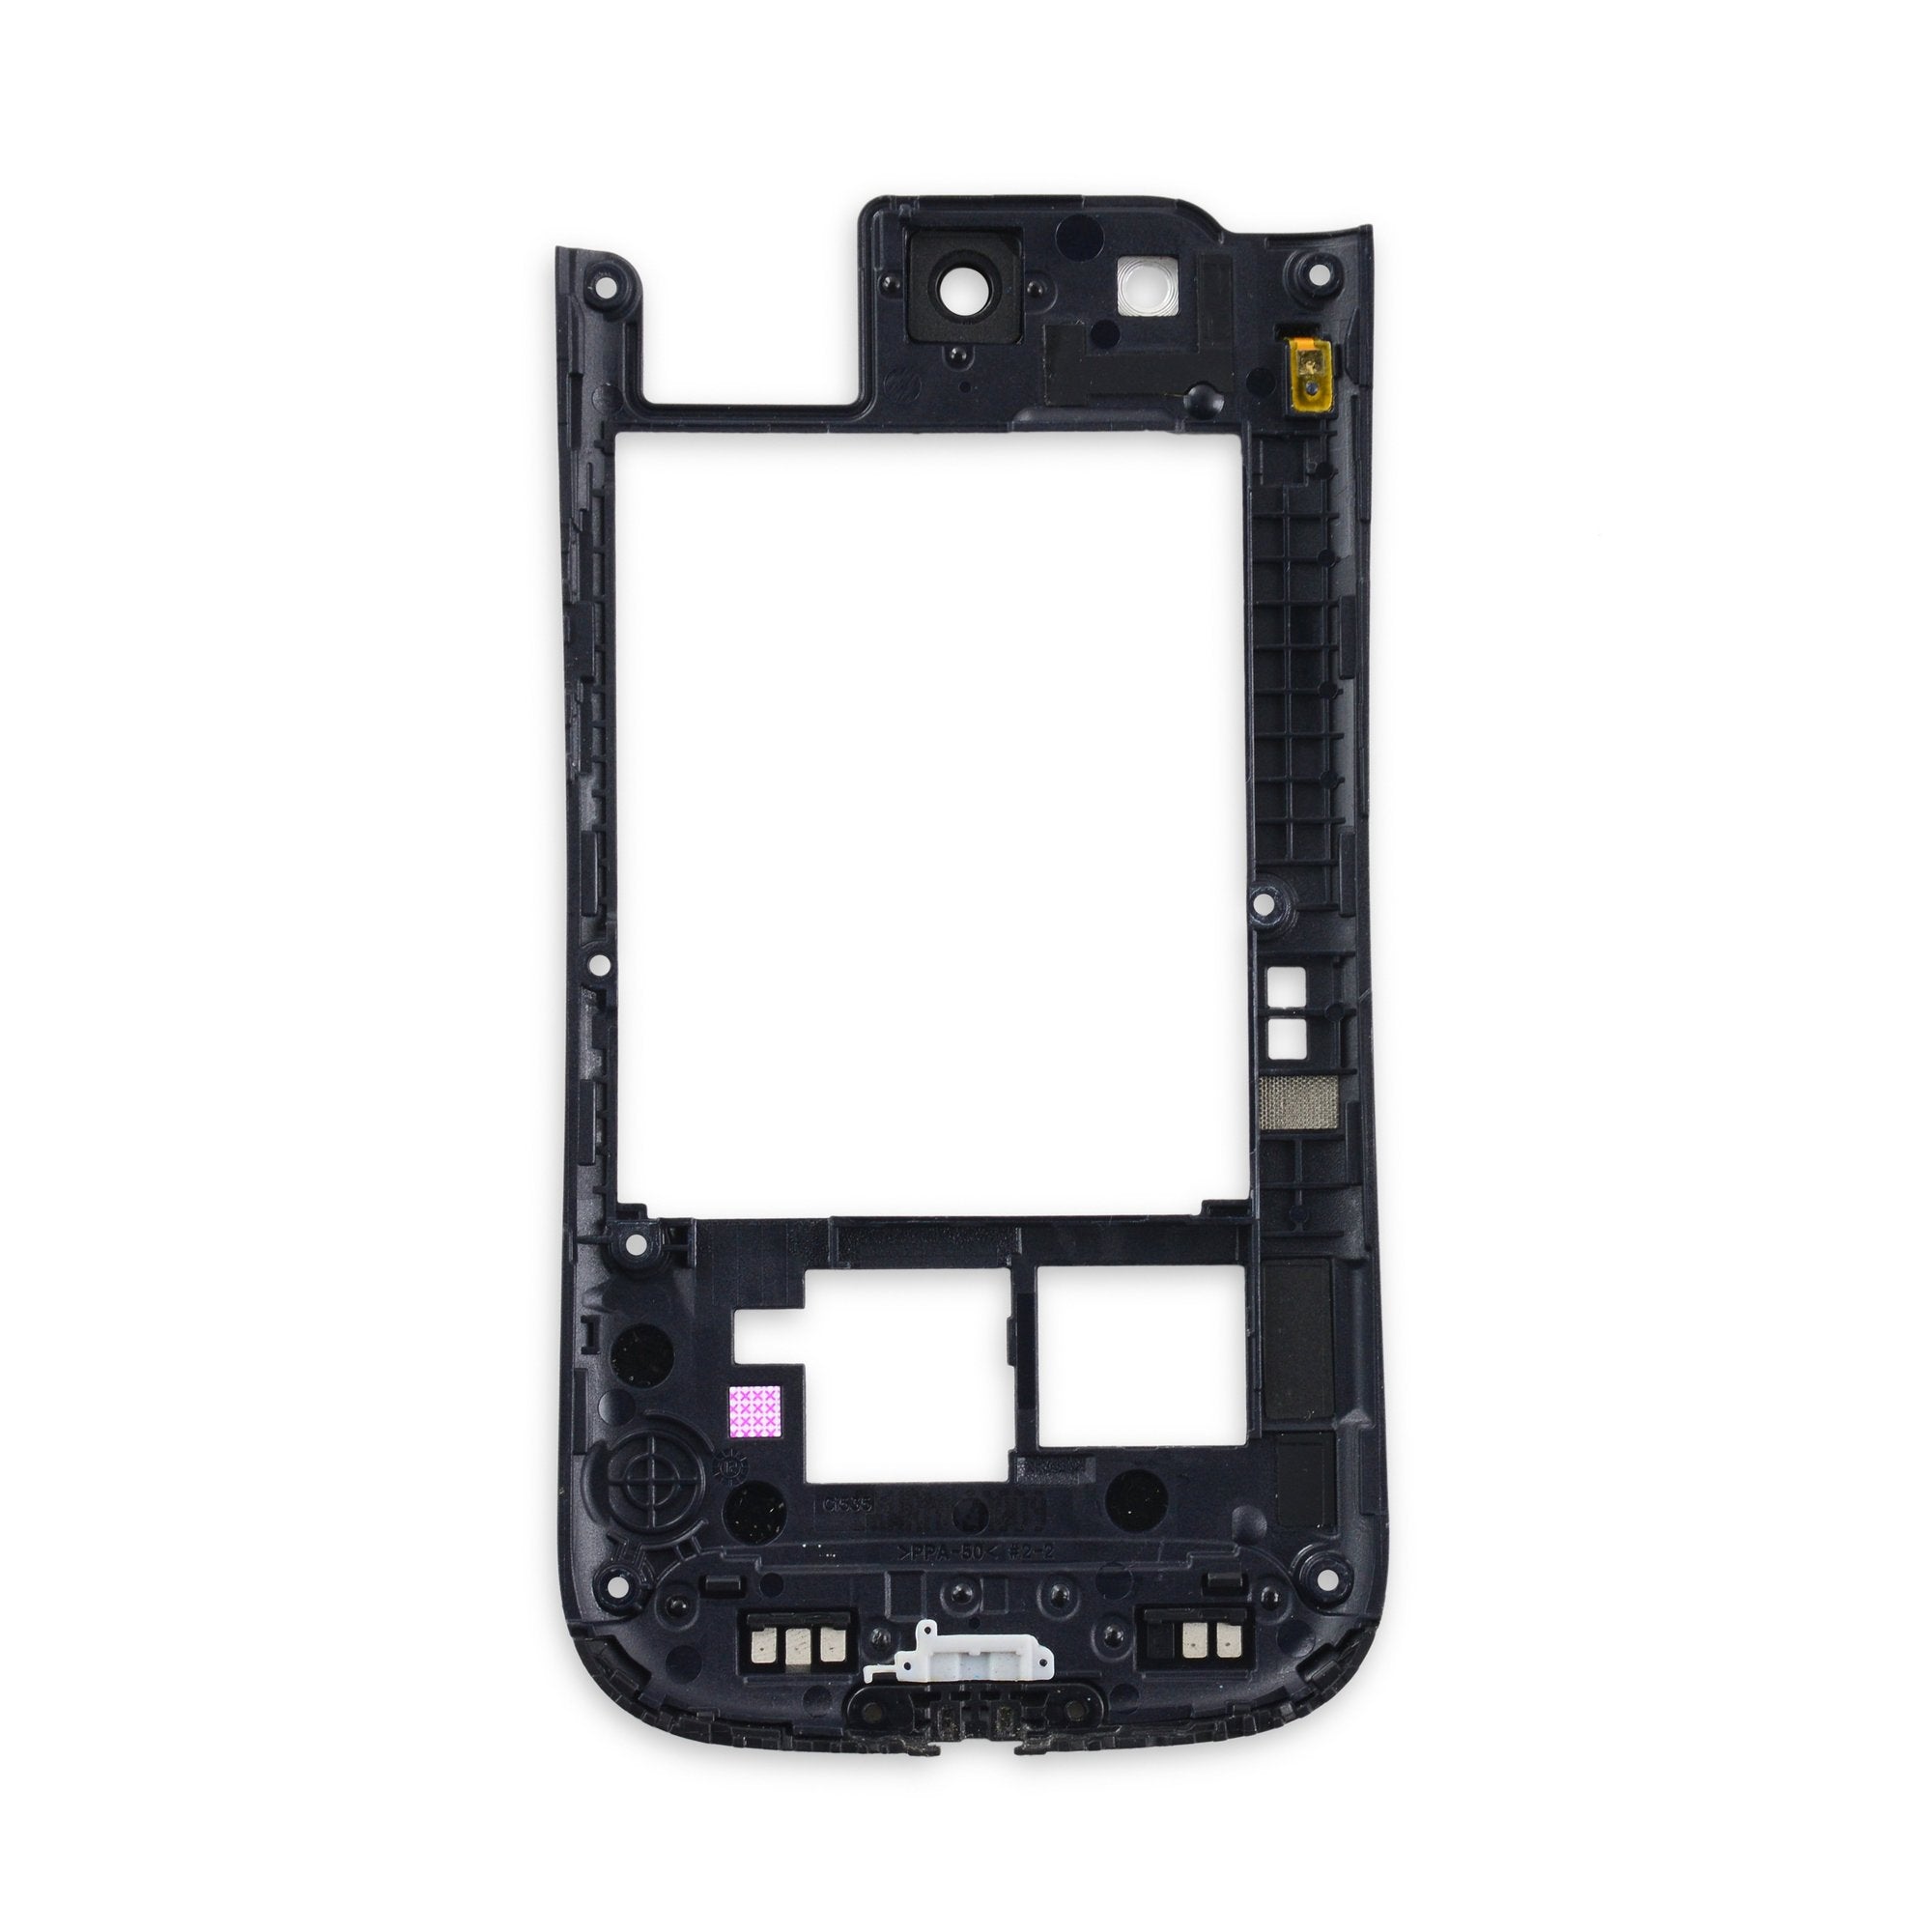 Galaxy S III Midframe (Verizon) Black Used, A-Stock